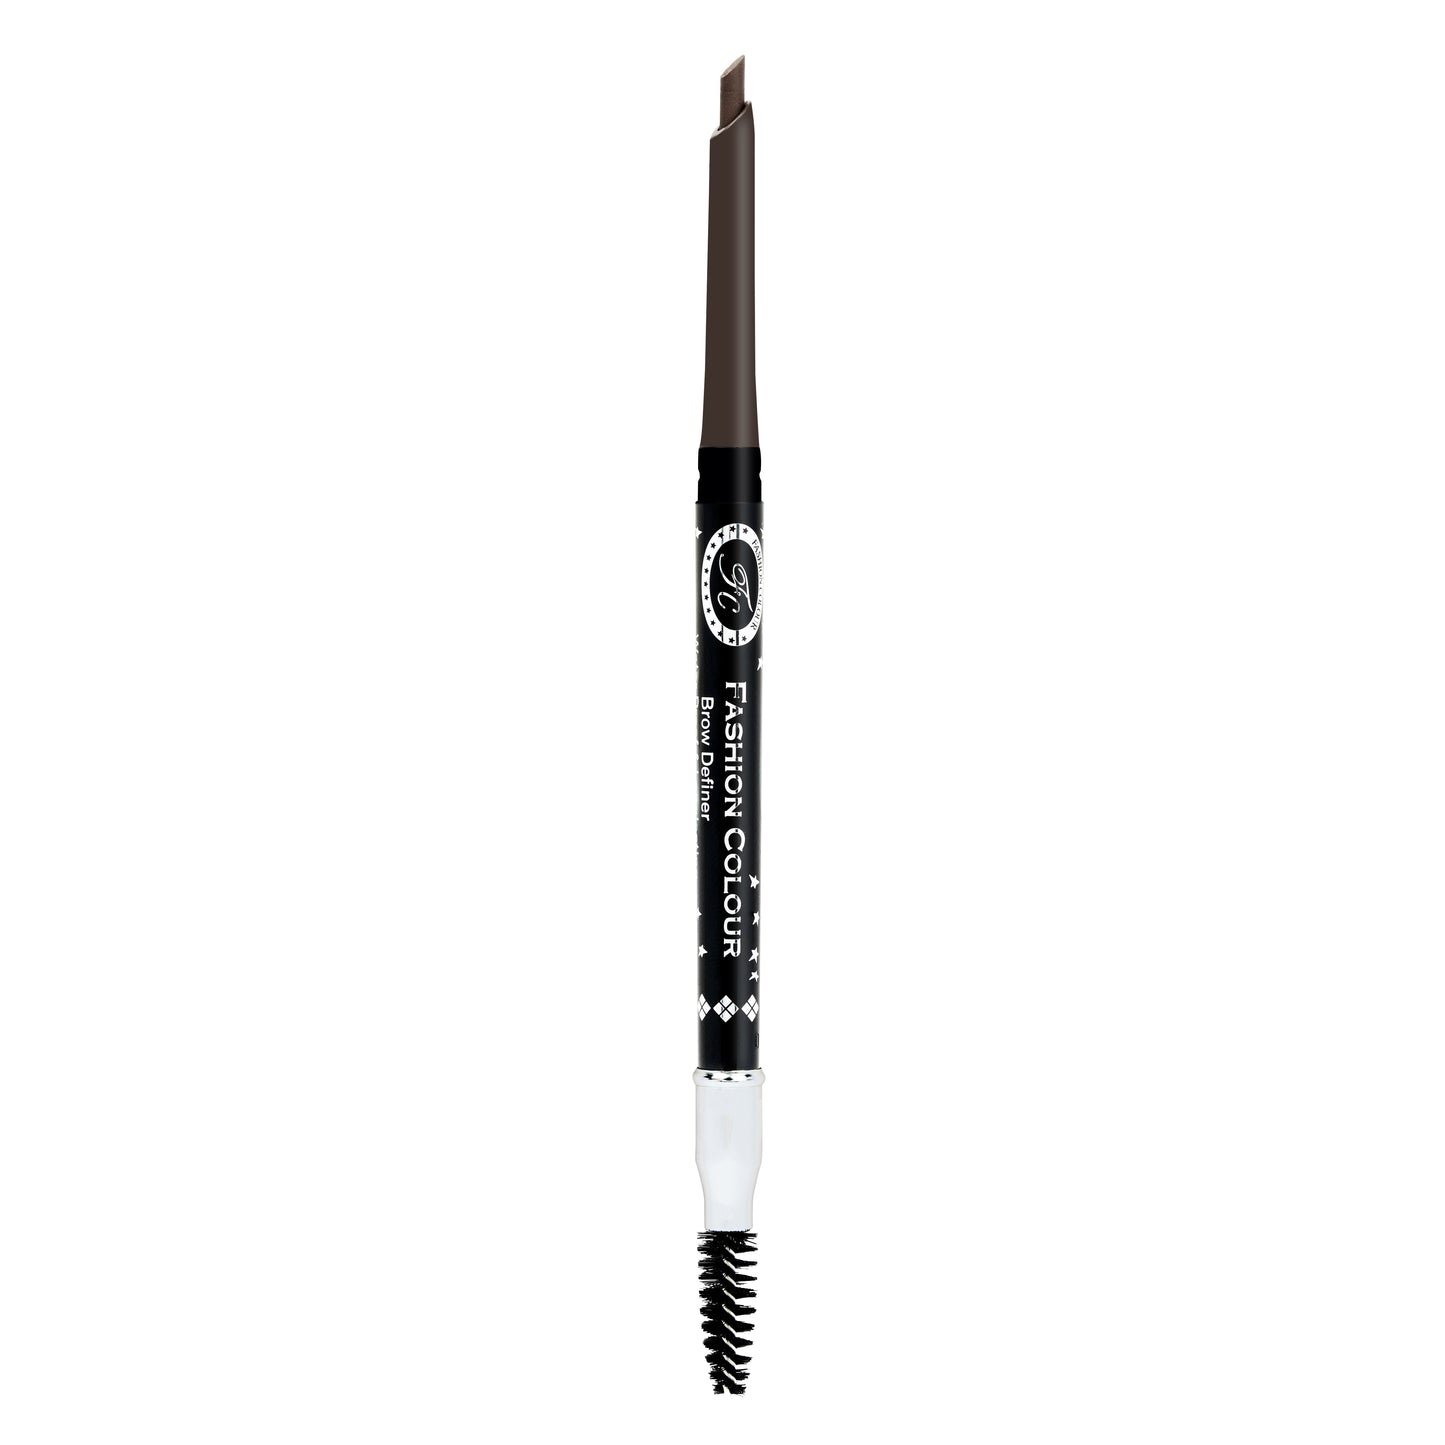 Intensifying Fill - In Browliner Eyeliner Pencil, 35g